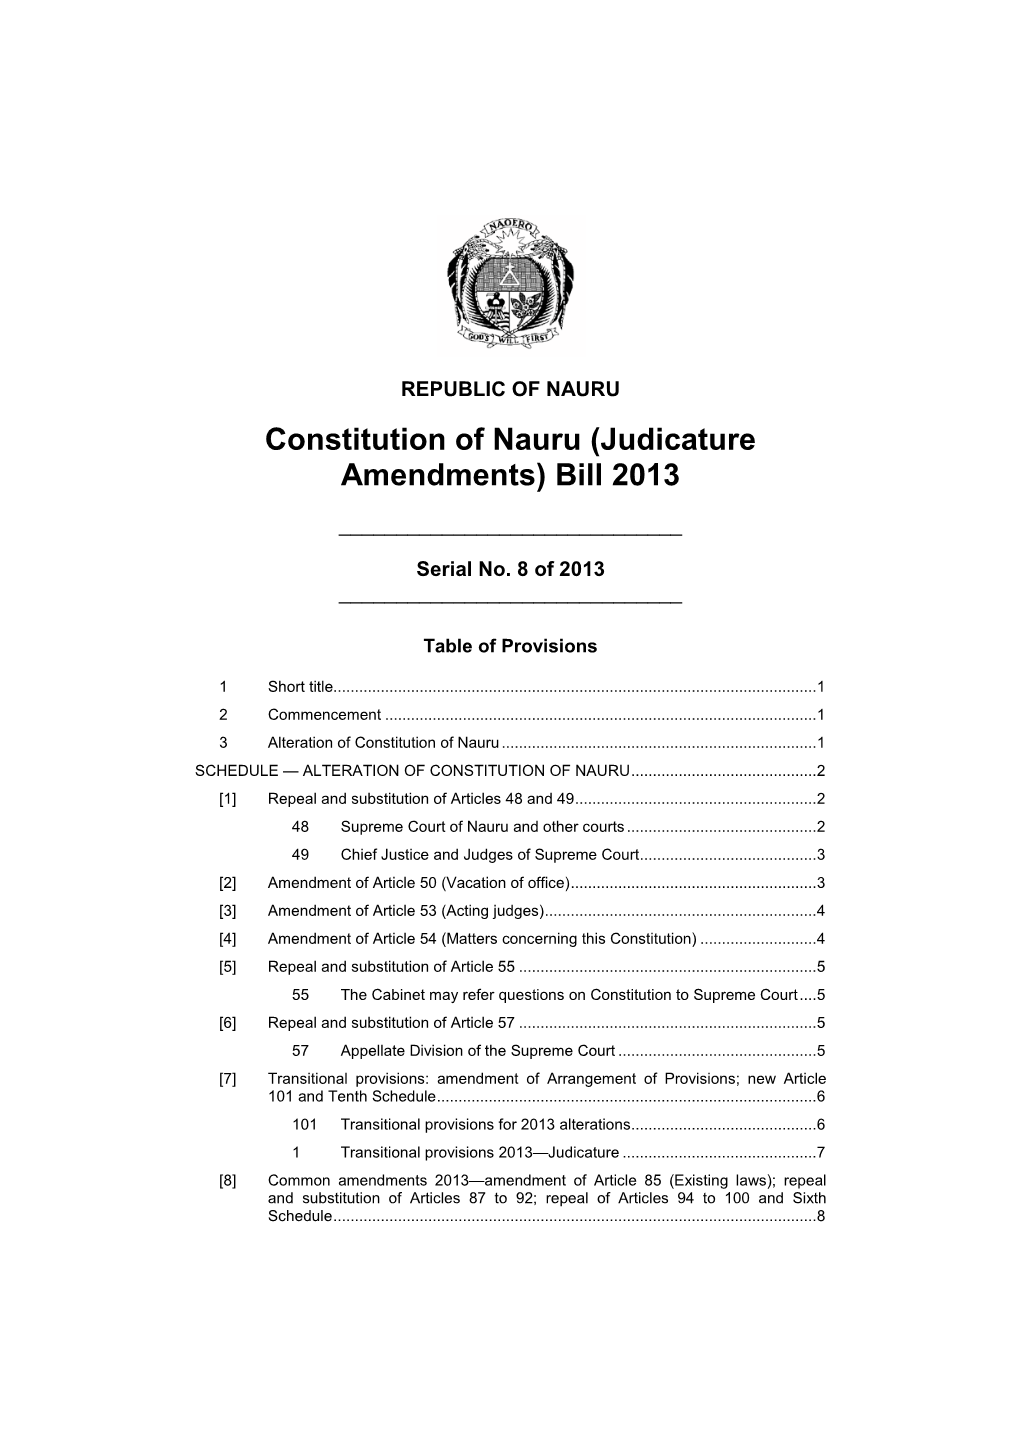 Constitution of Nauru (Judicature Amendments) Bill 2013